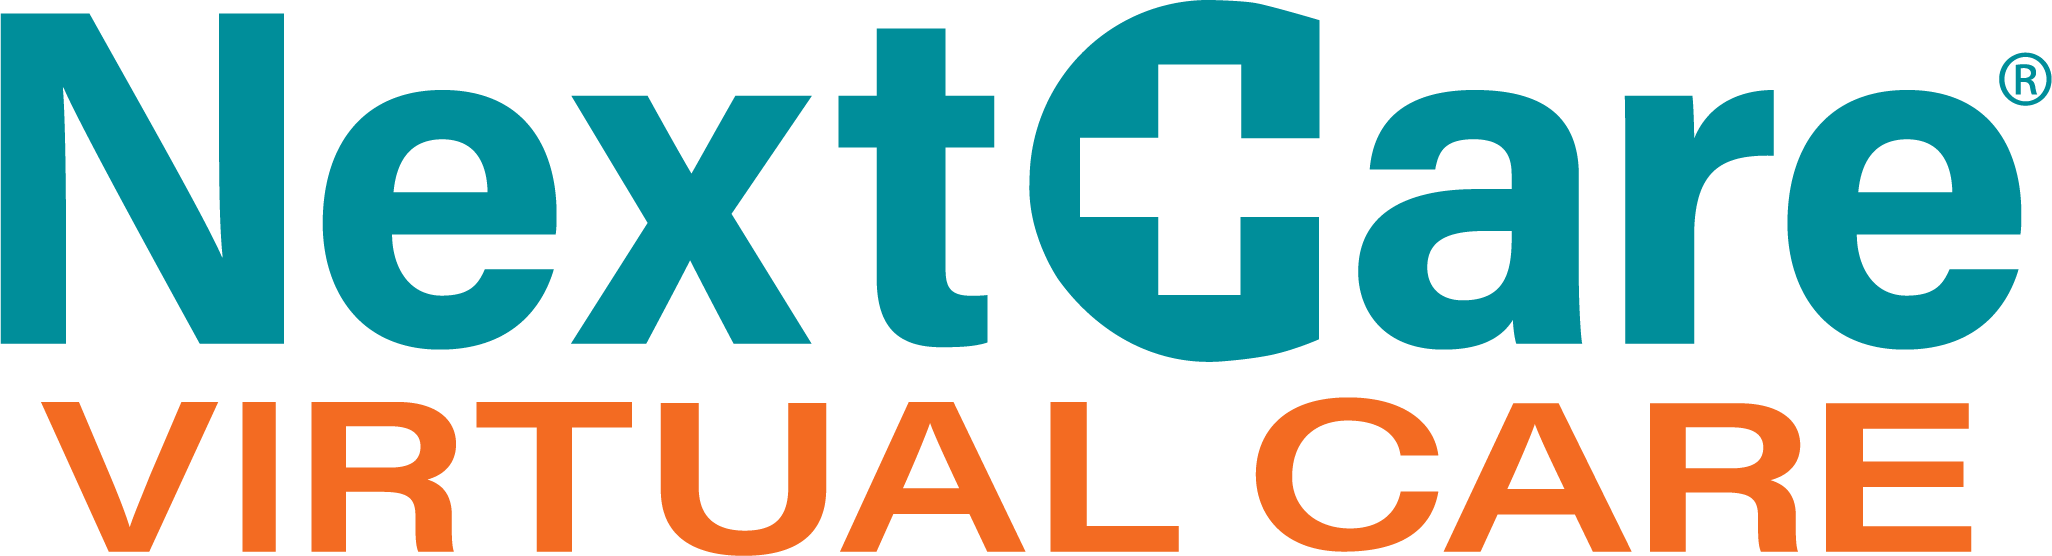 NextCare Urgent Care - New Mexico Virtual Visit Logo